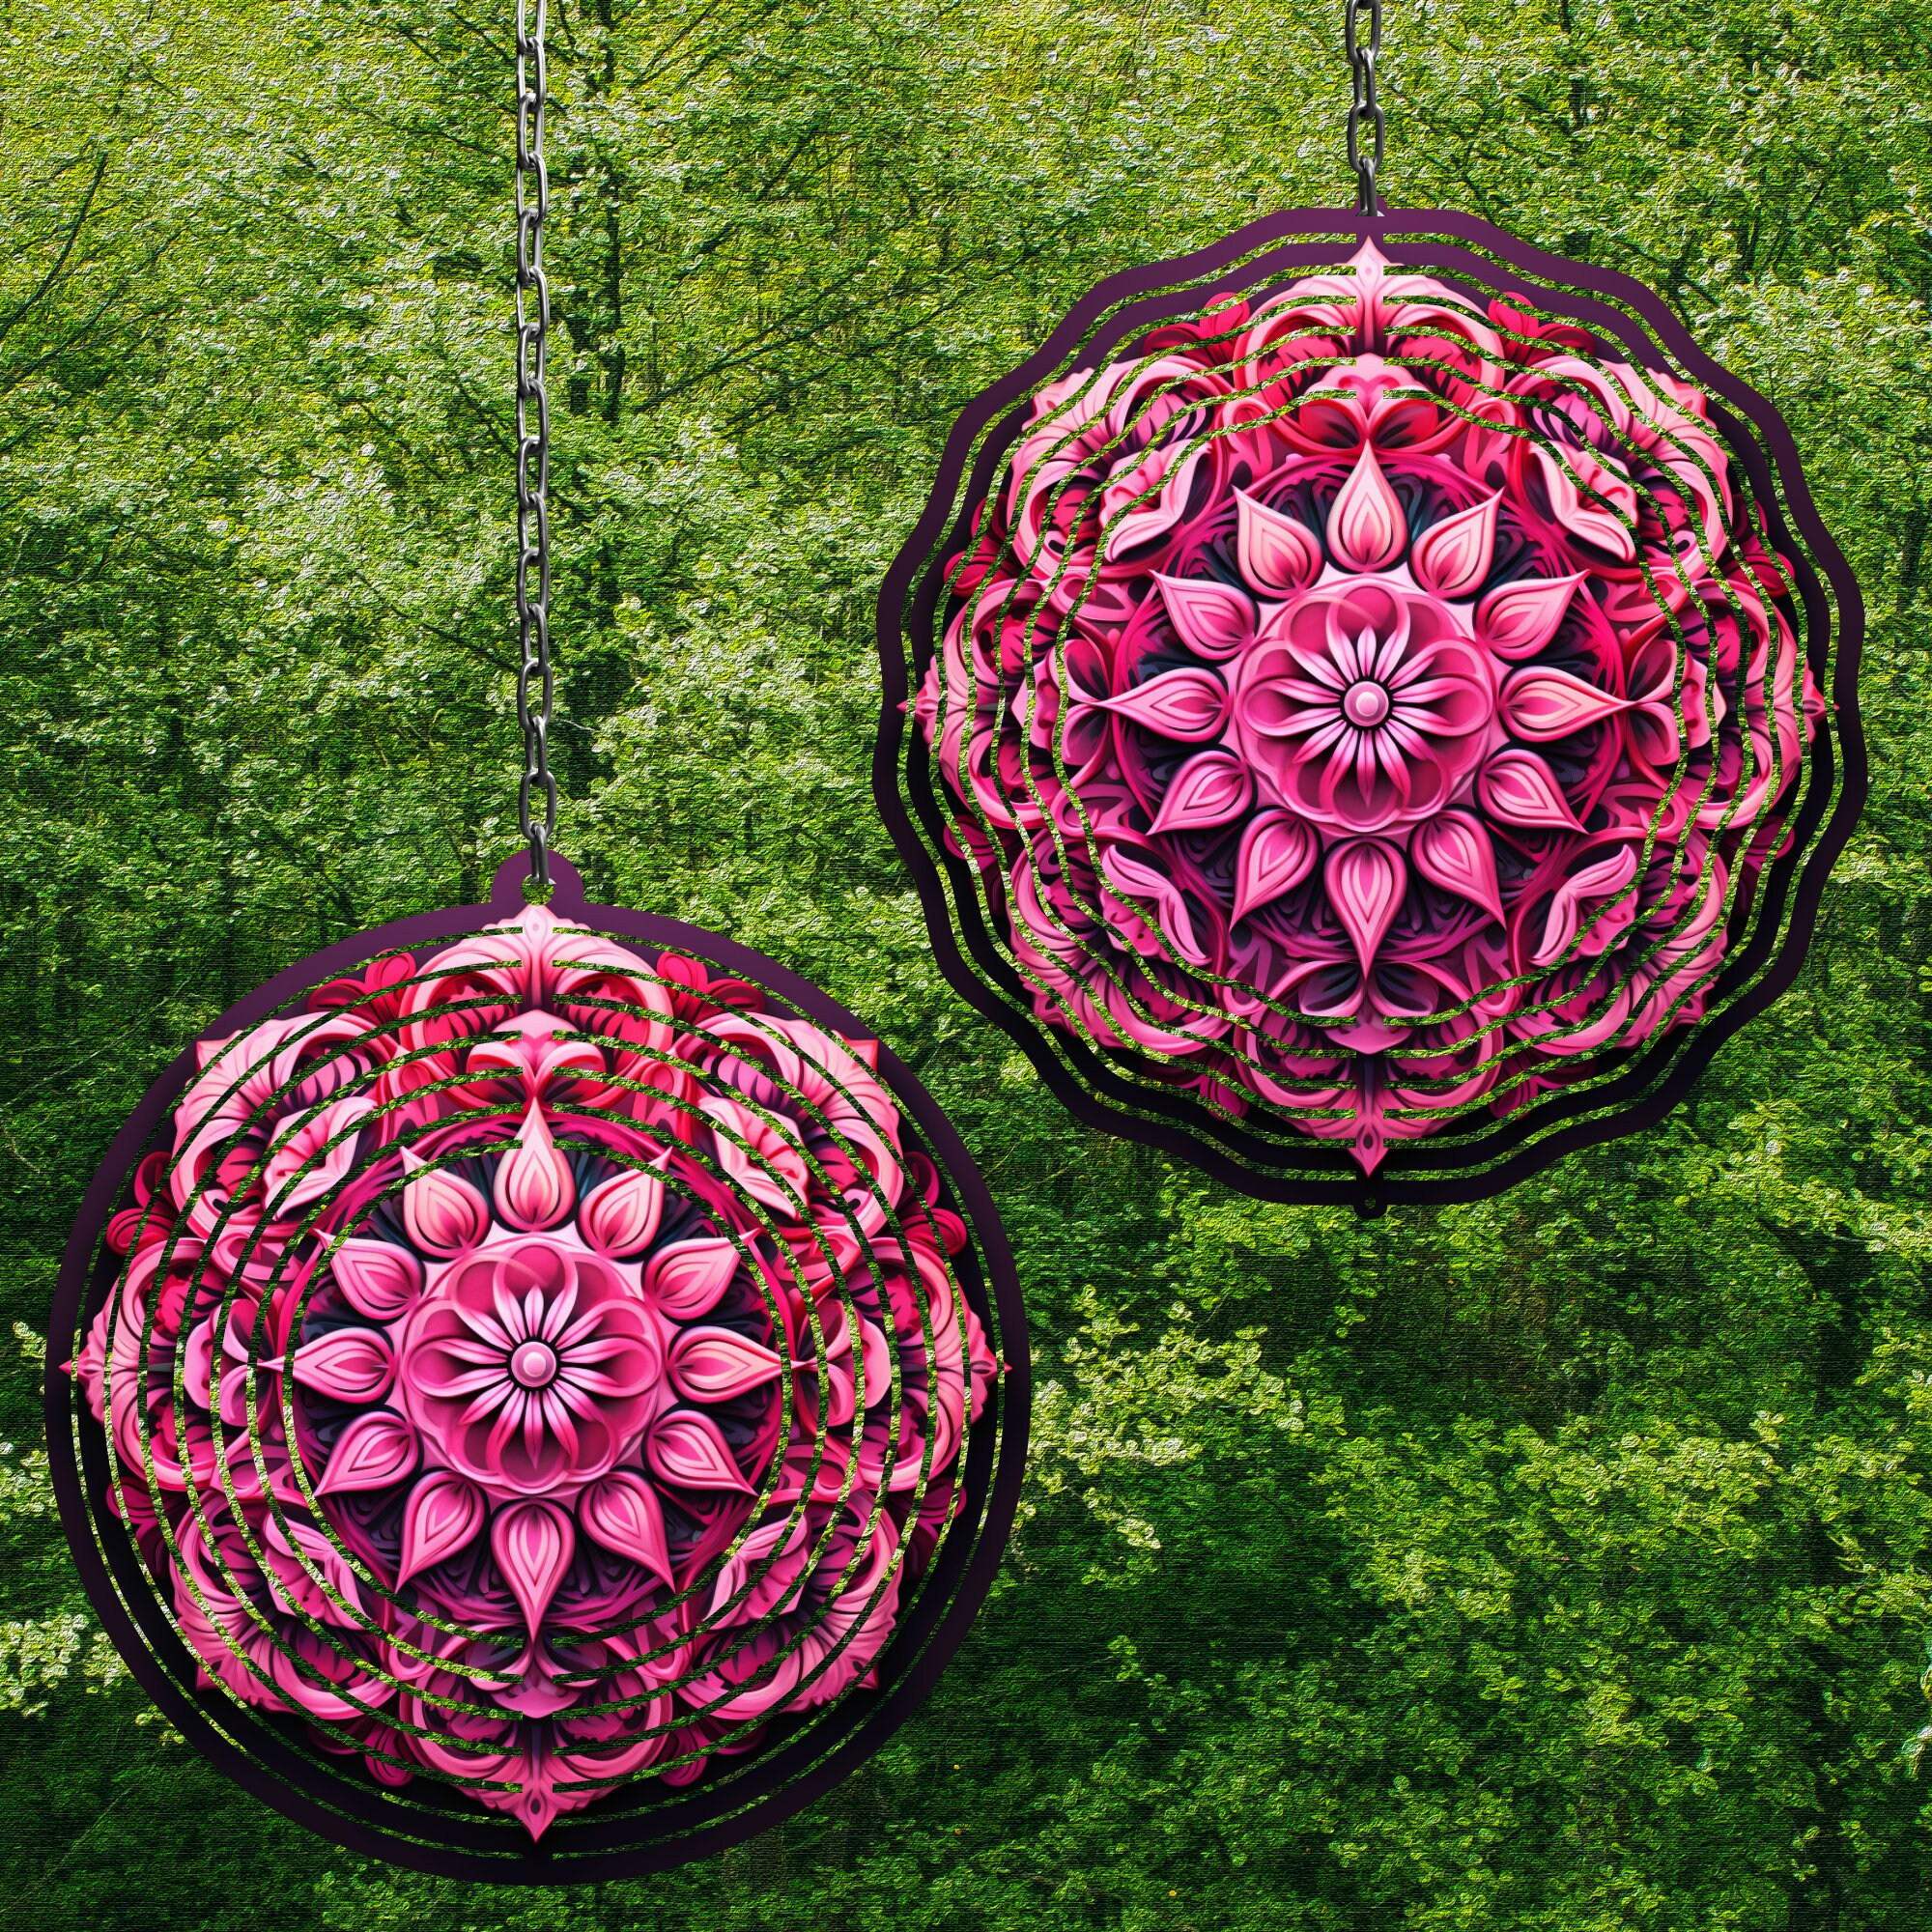 Hot Pink Wind Spinner For Yard And Garden, Outdoor Garden Yard Decoration, Garden Decor, Chime Art Gift